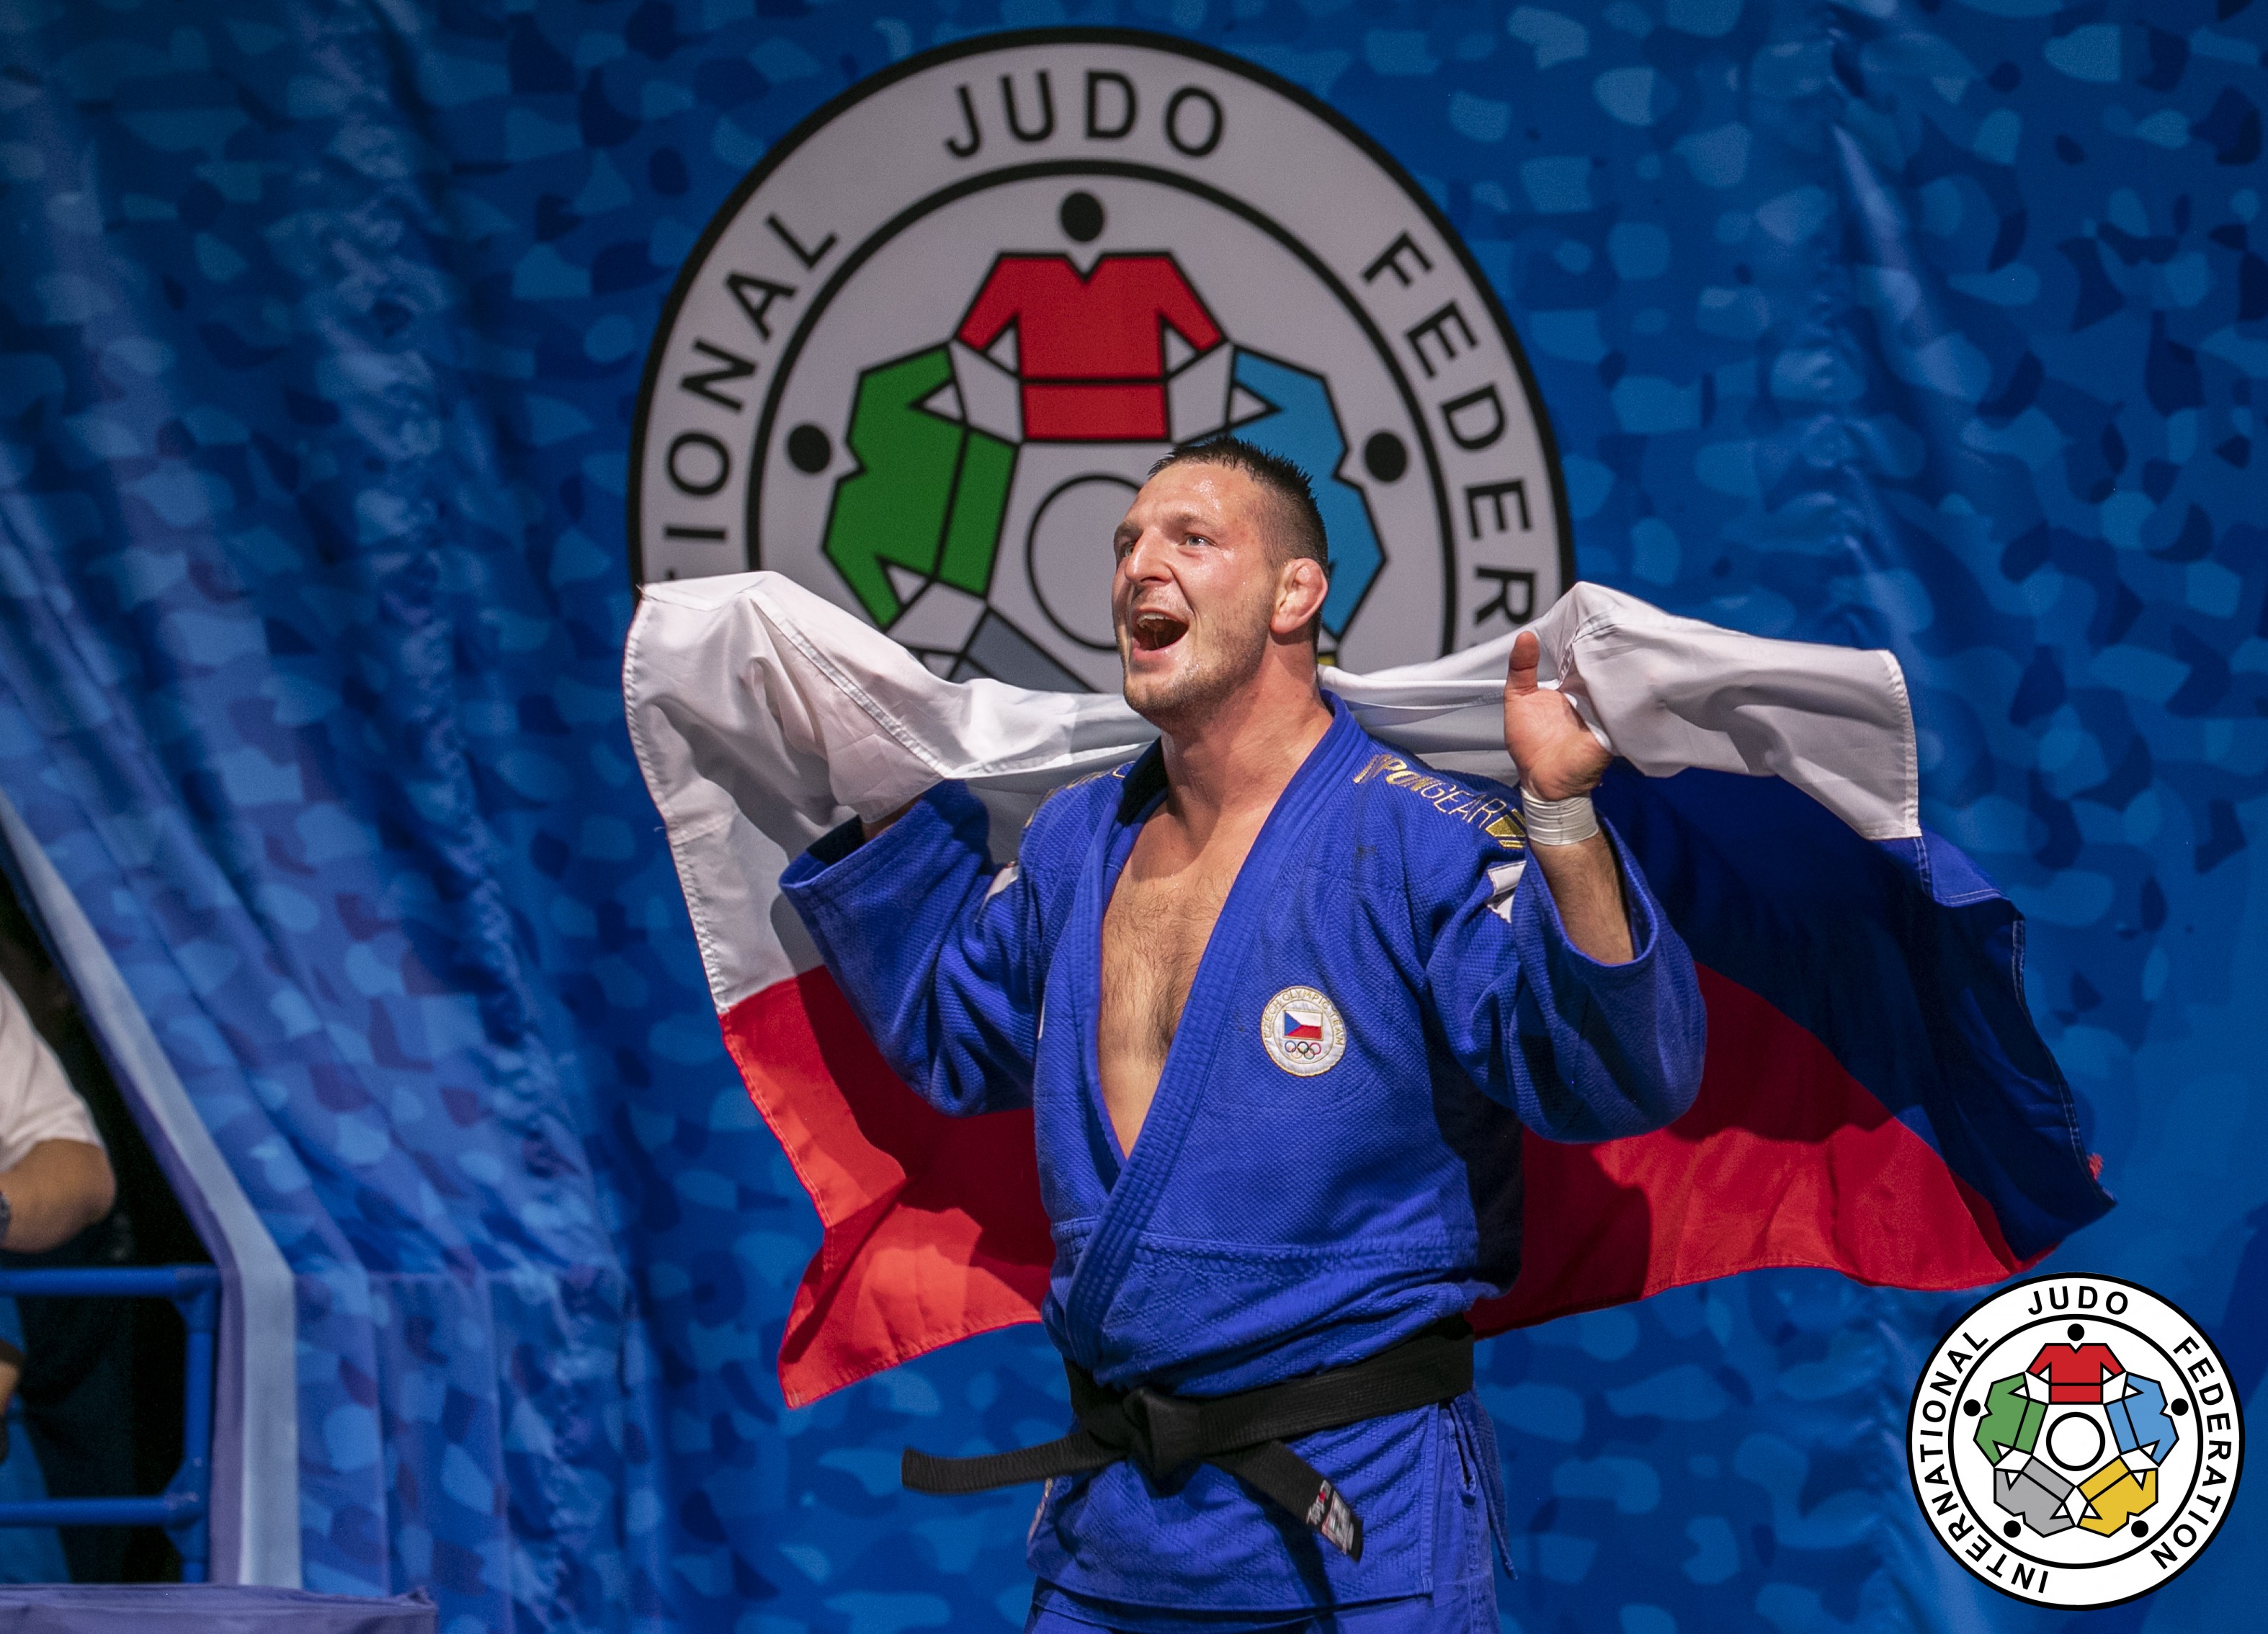 Judo-World-Championships-2019-KRPALEK-Lukas-4